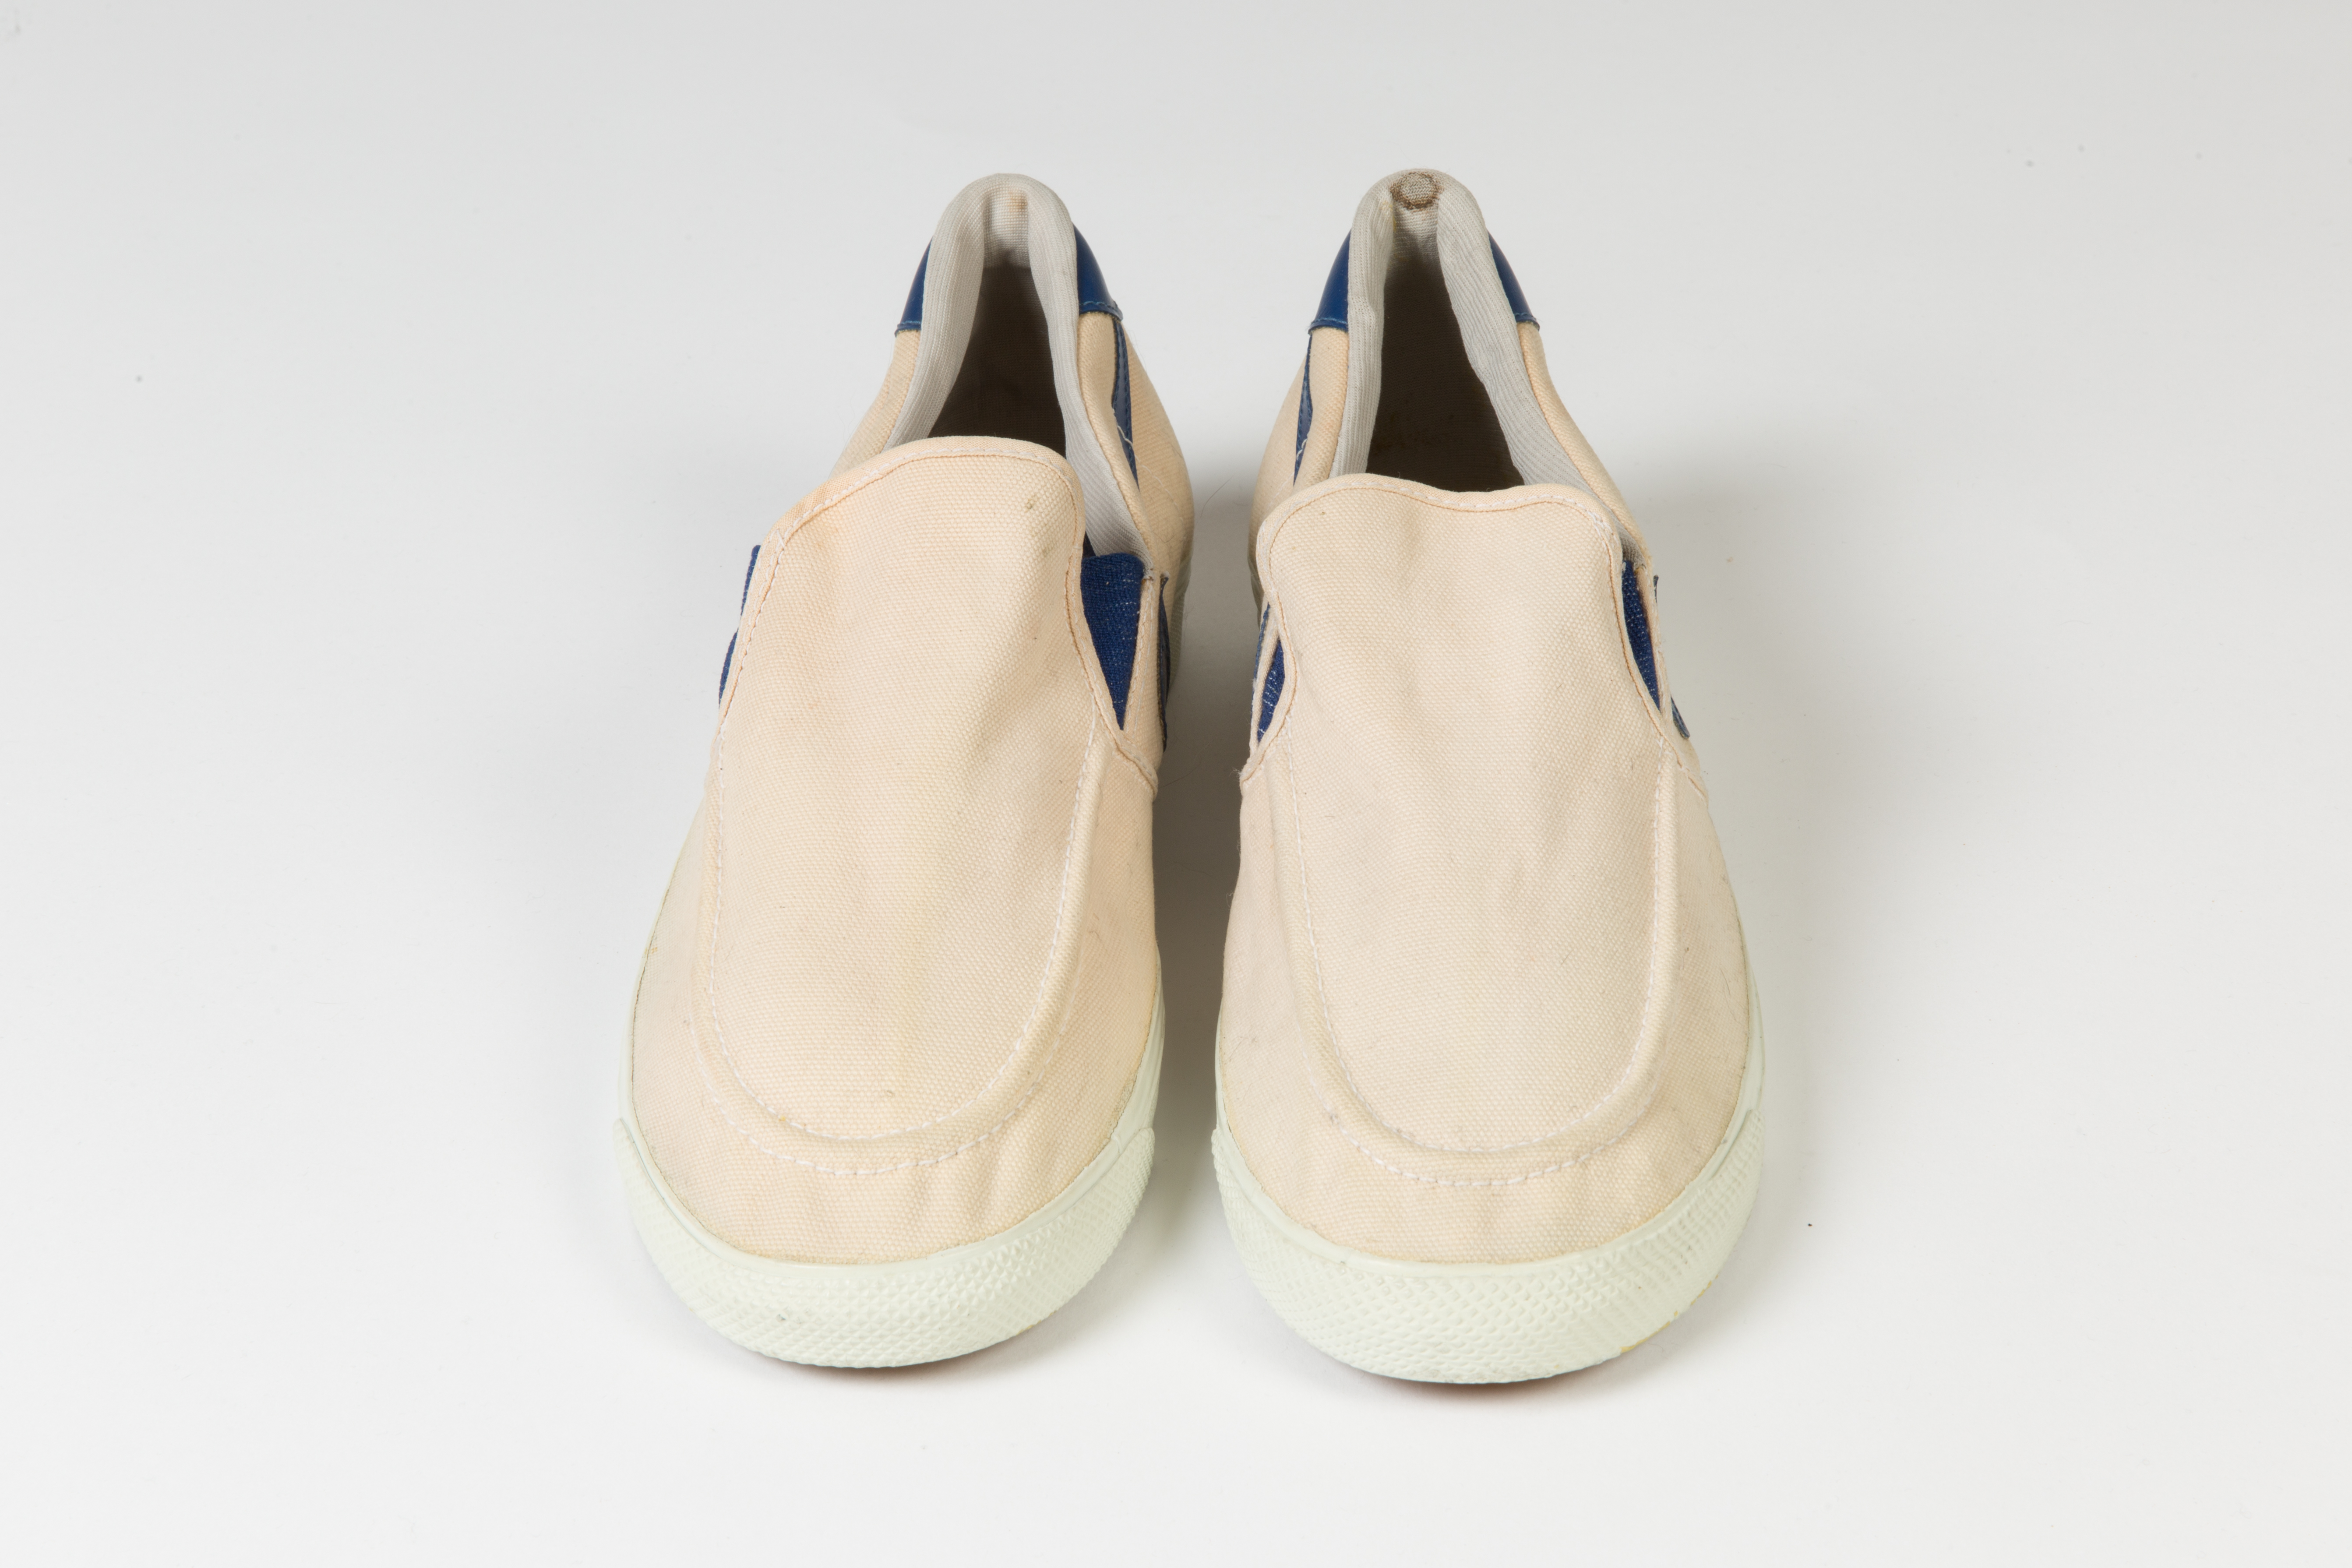 1999 Nike Canvas Sneakers Shoes Men's Size 8 Beige White Tan 1990's Vintage  Boat Deck 90's - Etsy